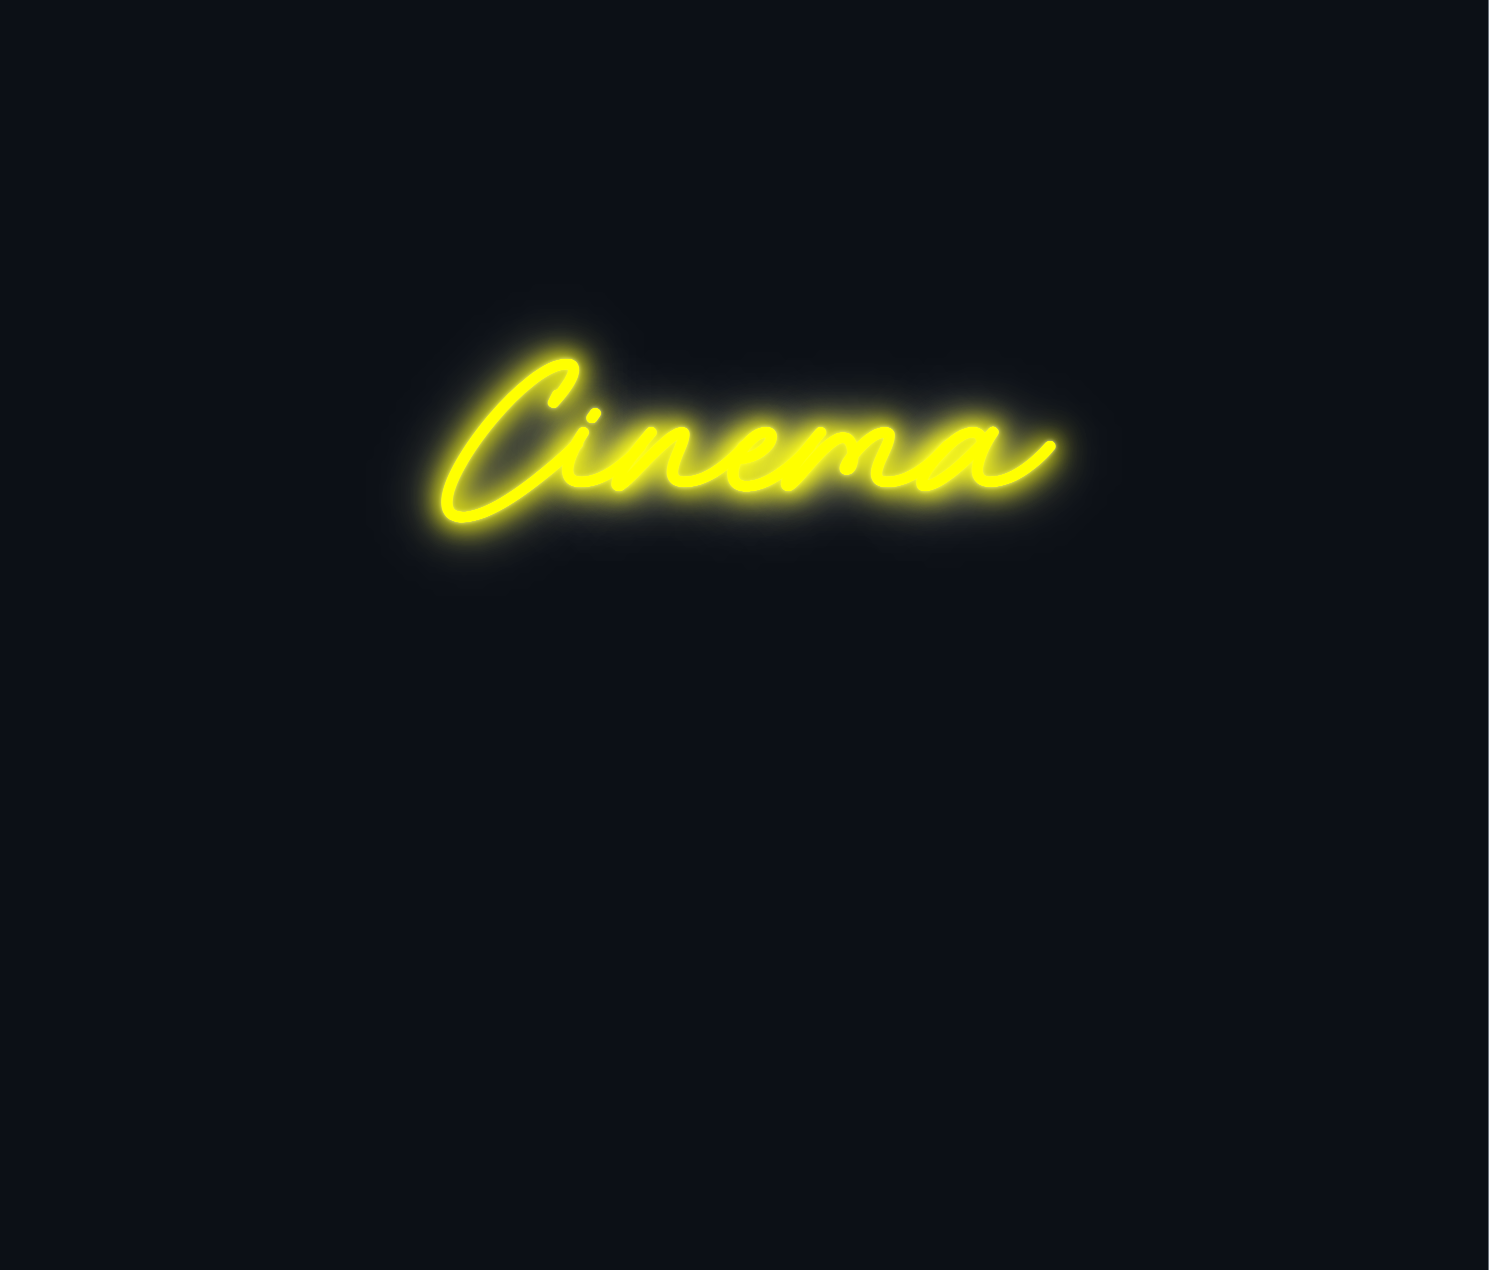 Custom neon sign - Cinema